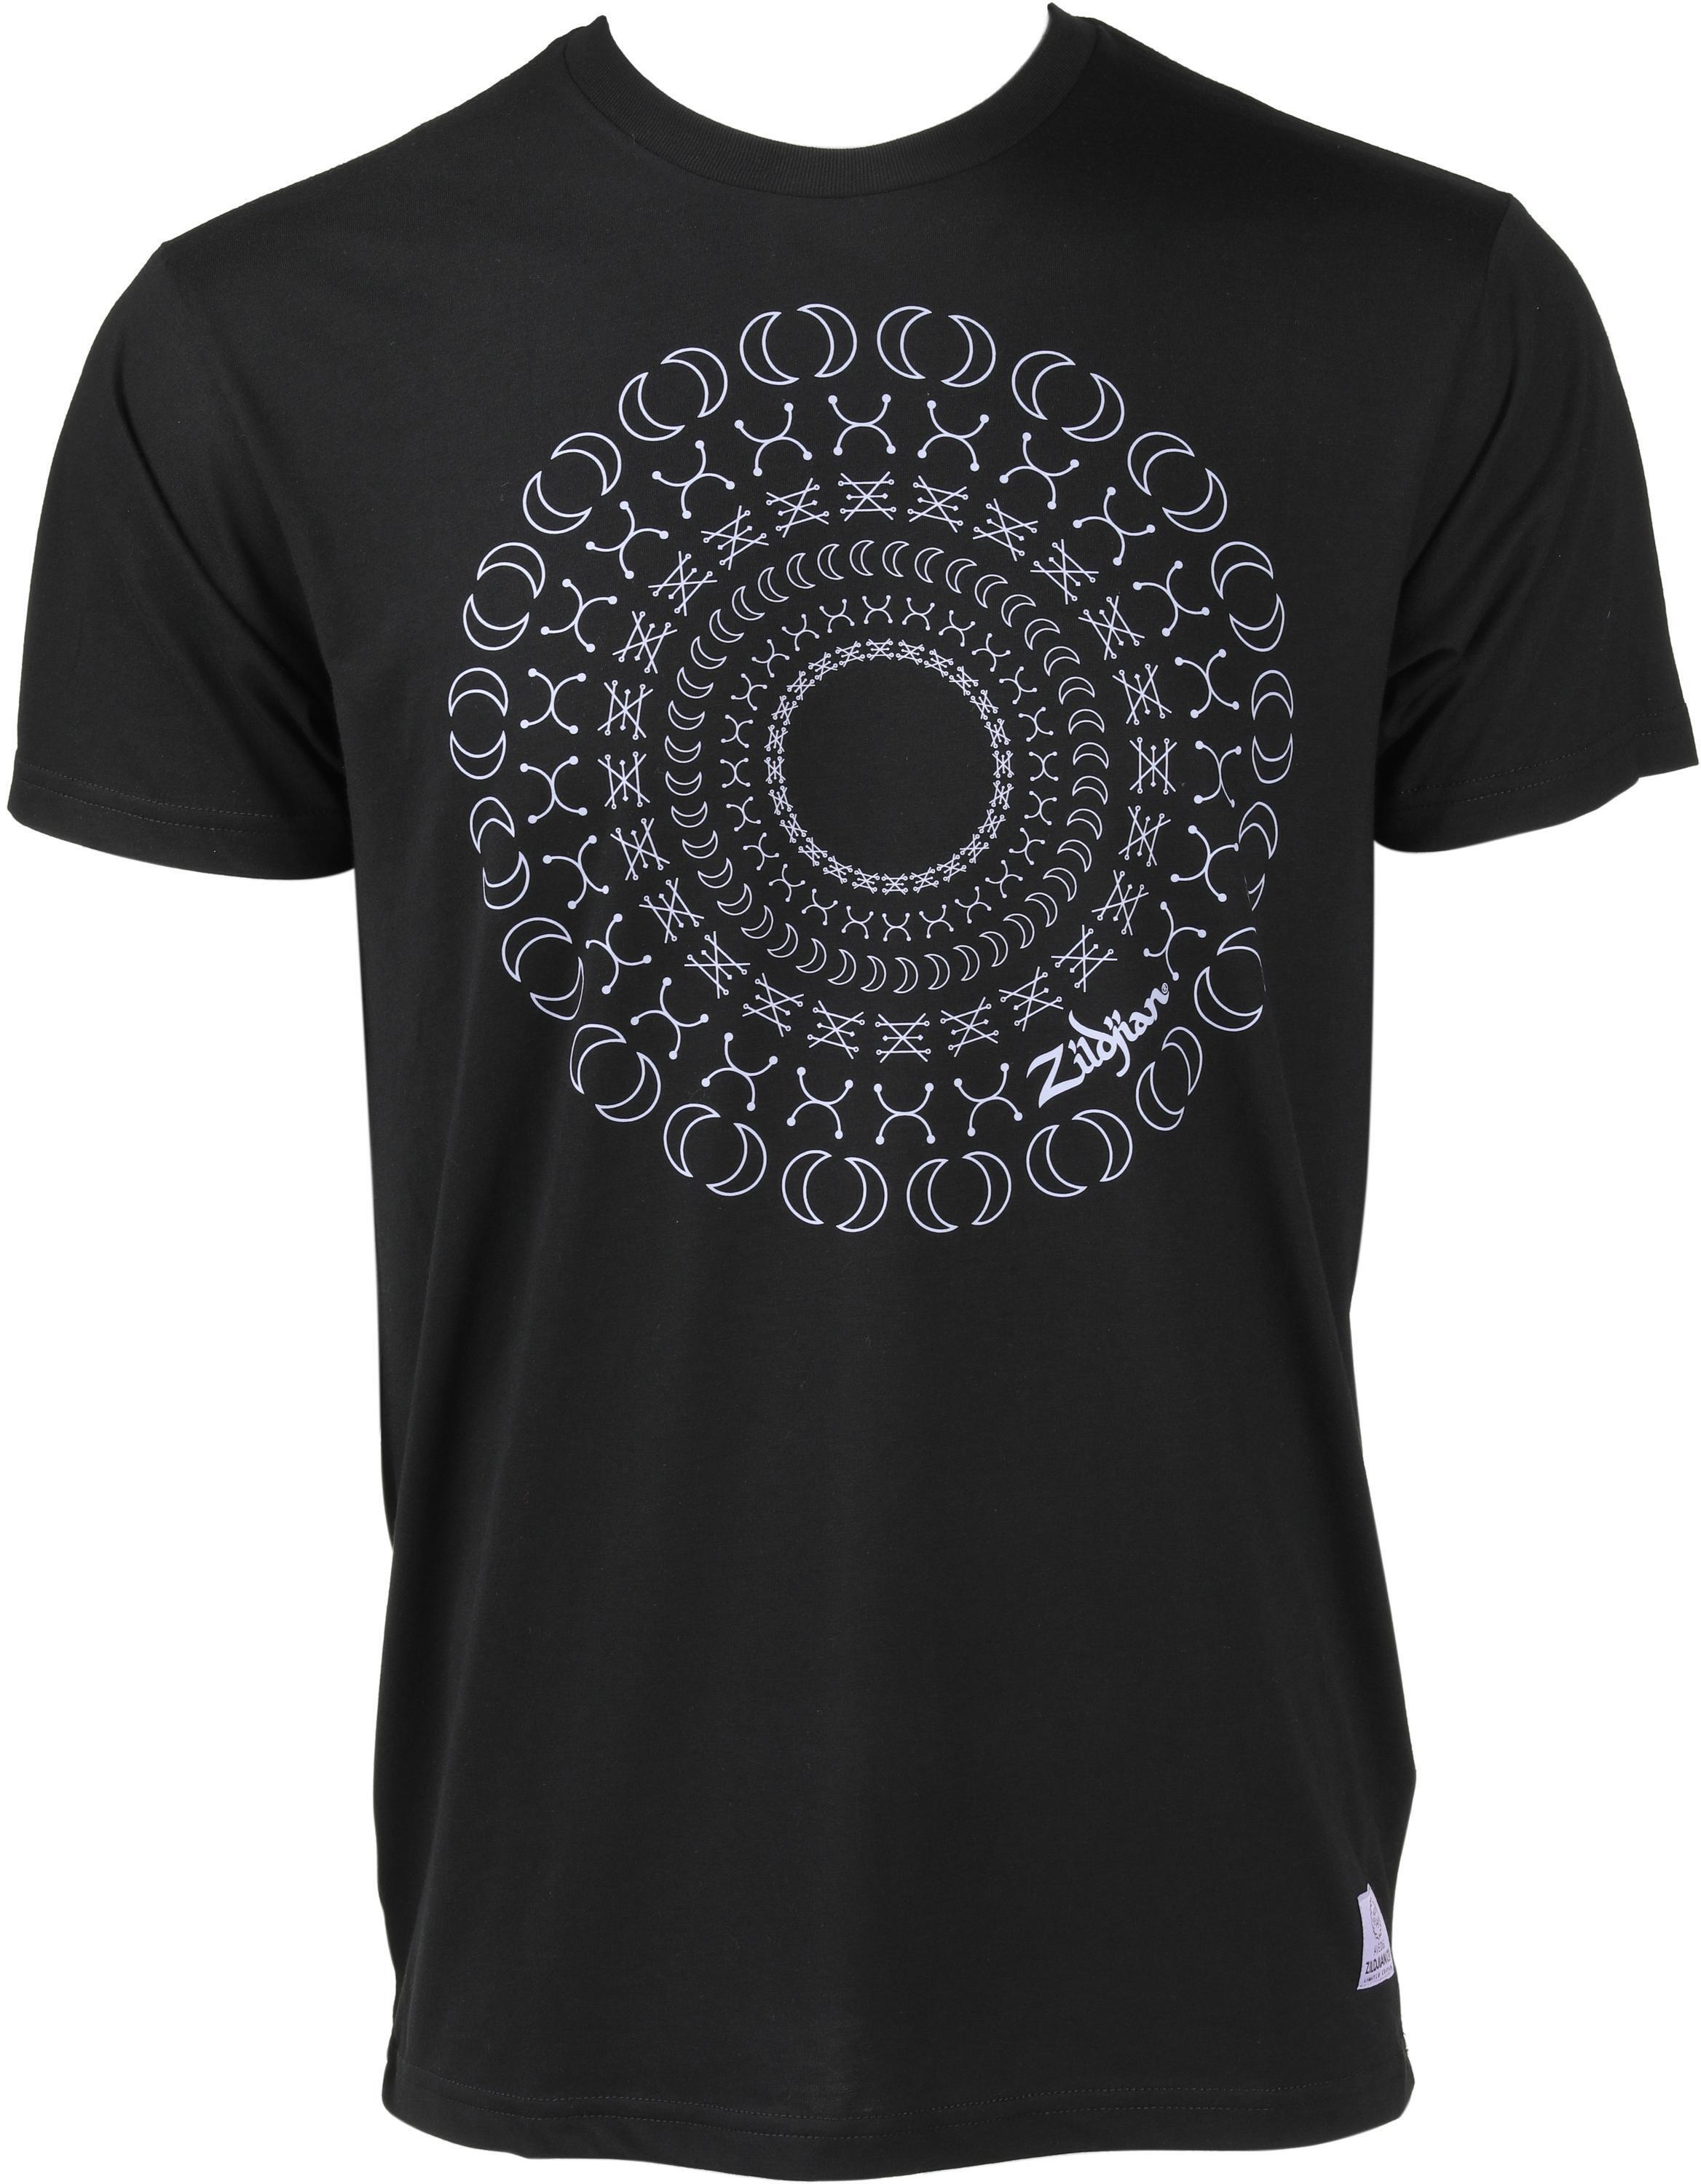 Bundled Item: Zildjian 400th Anniversary Alchemy T-shirt - X-Large